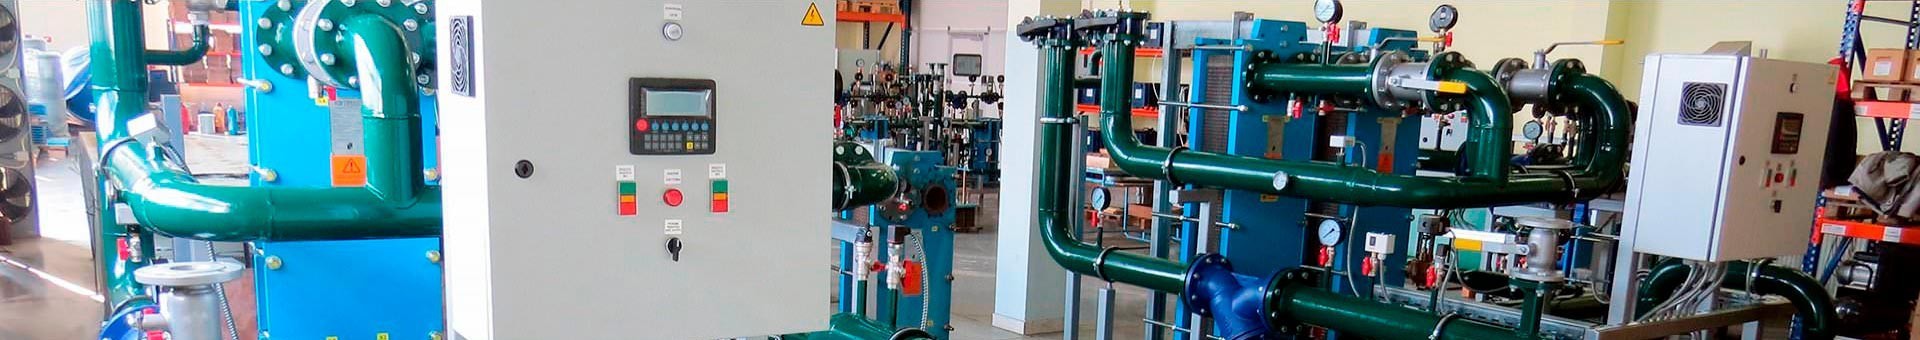 Heat exchangers THERMAKS SWEP OPEKS in combined heat pump plants